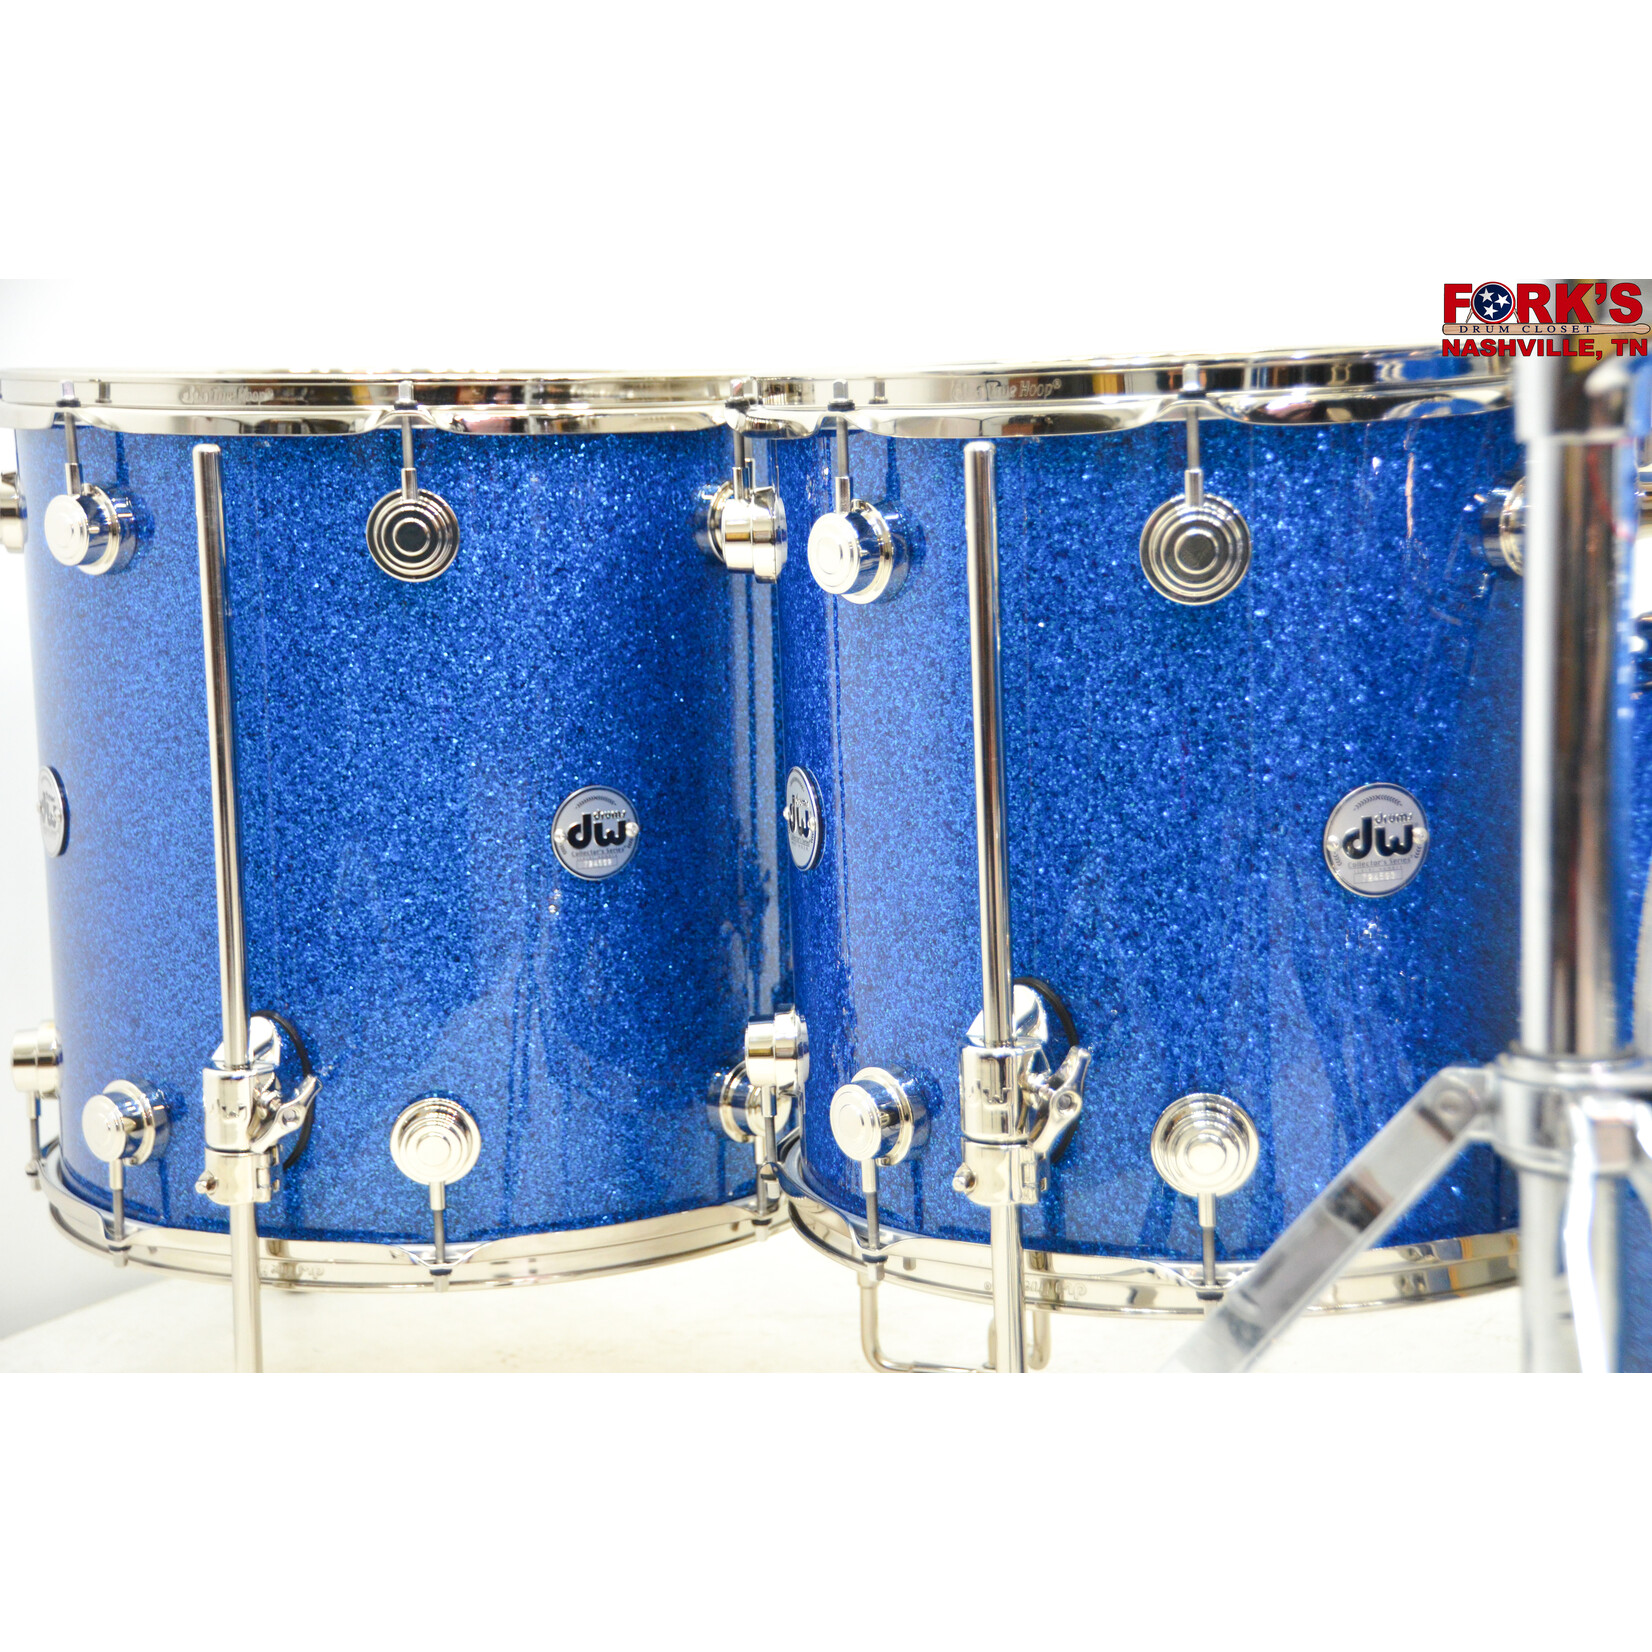 DW DW Collectors Maple 5pc Drum Kit - "Blue Glass Glitter" Nickel Hardware